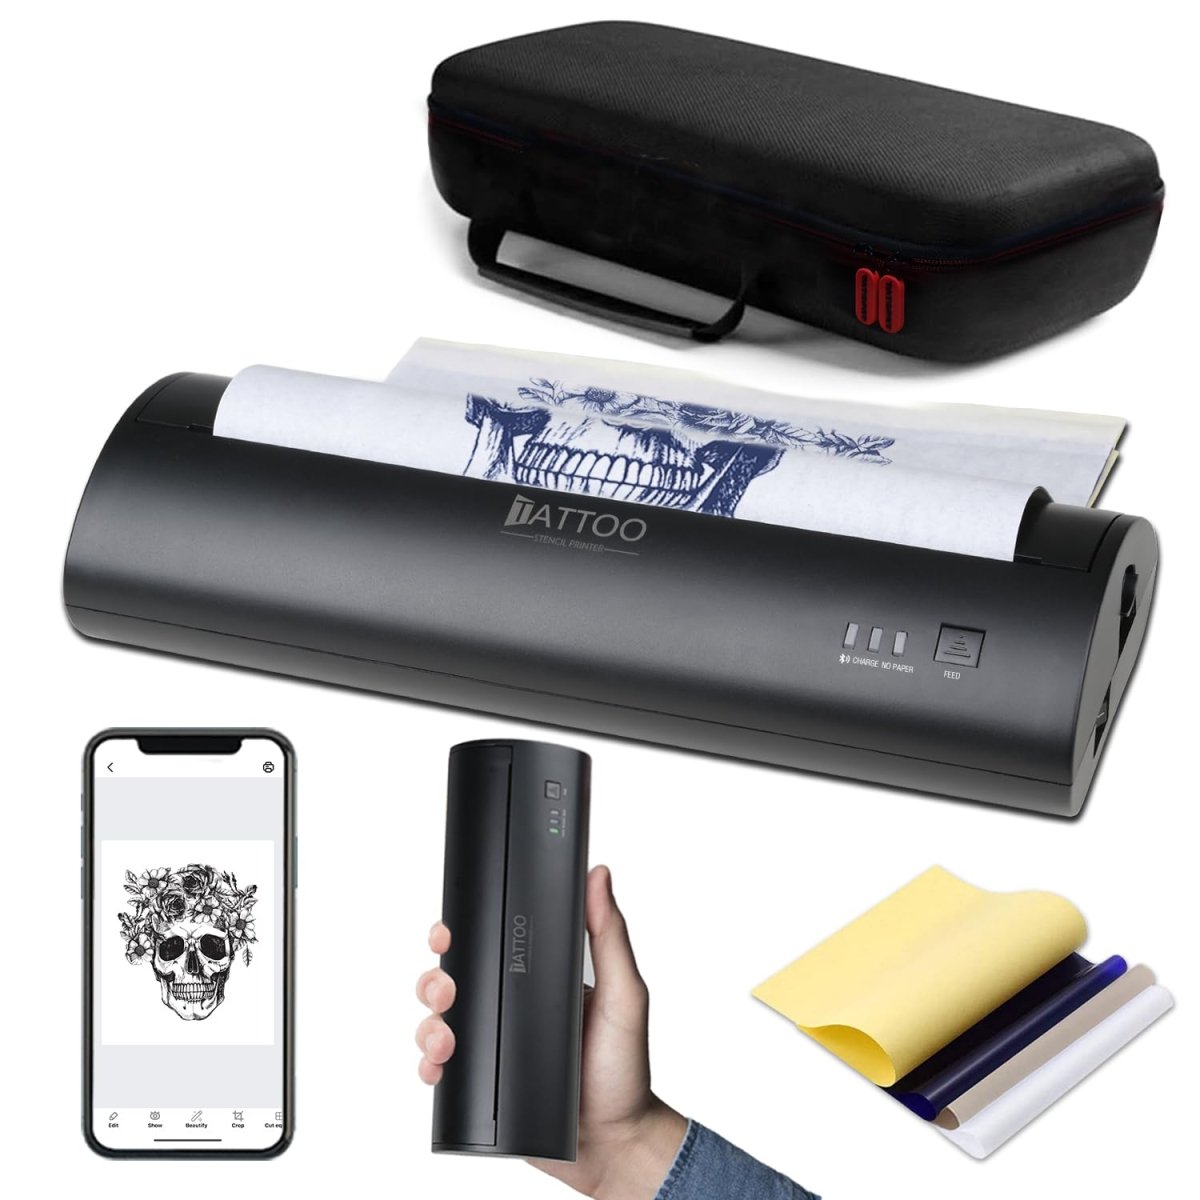 Atelics Wireless Tattoo Transfer Stencil Printer with Storage Case